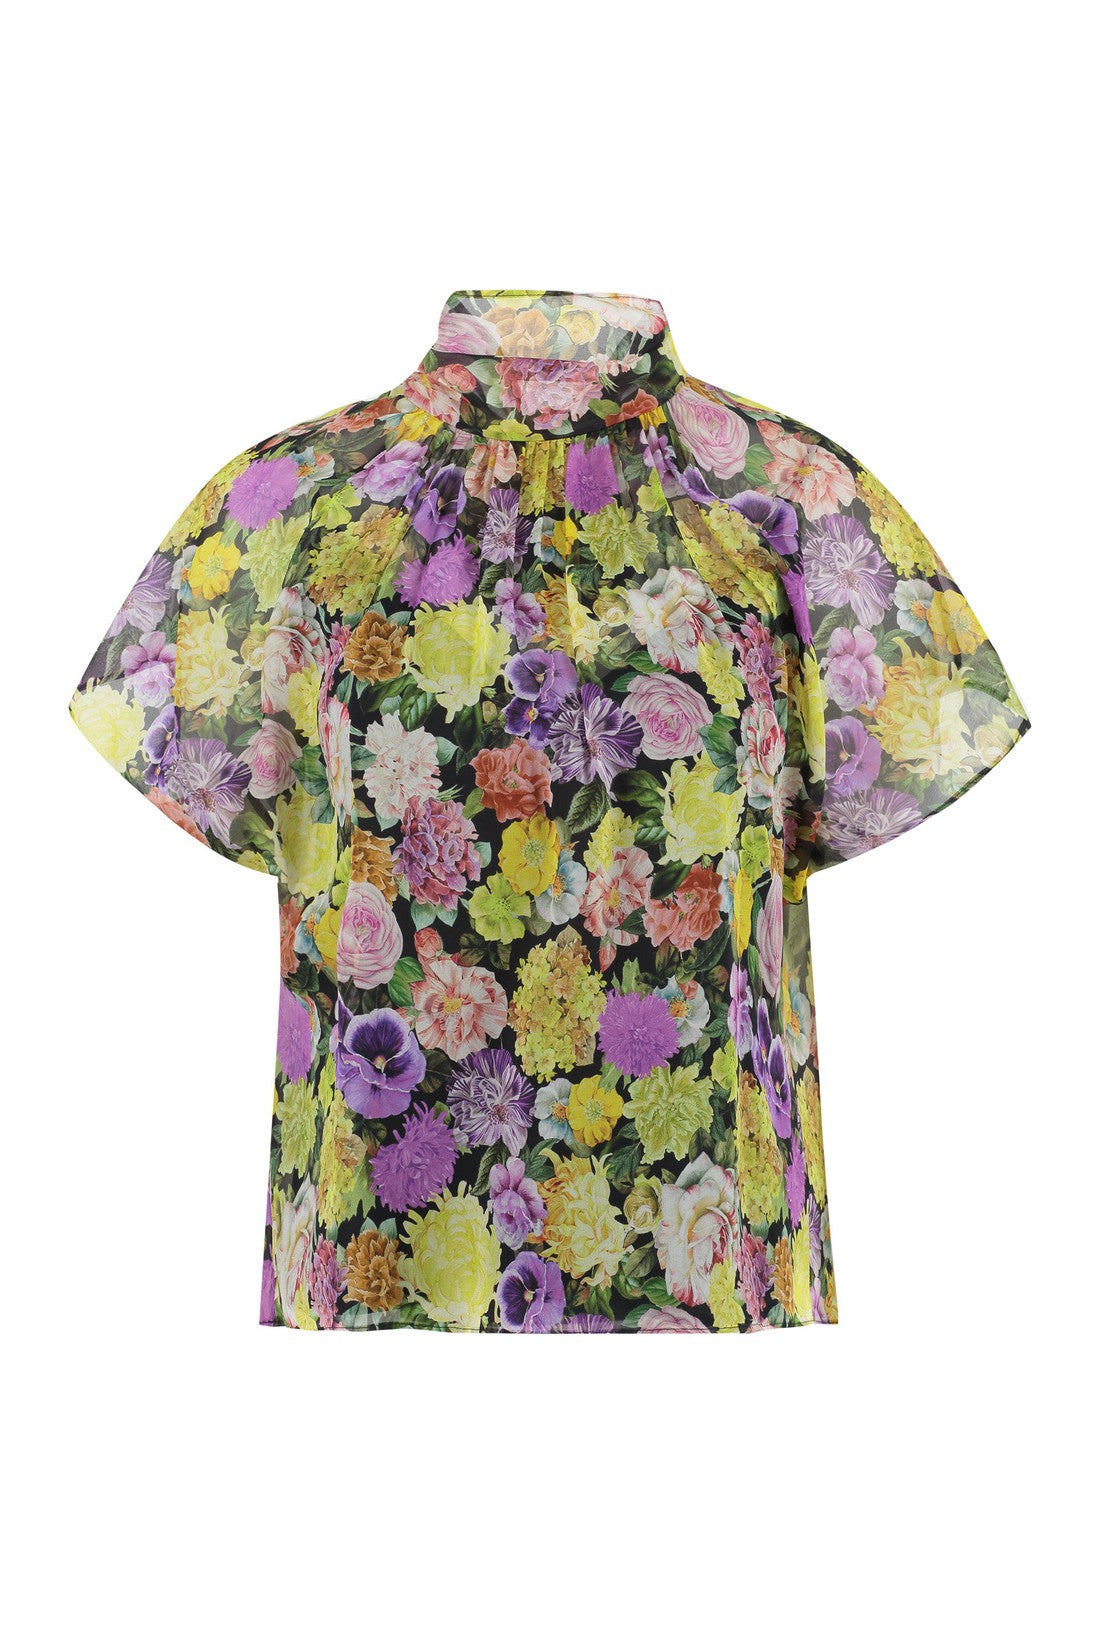 Max Mara Studio-OUTLET-SALE-Cesena printed silk blouse-ARCHIVIST